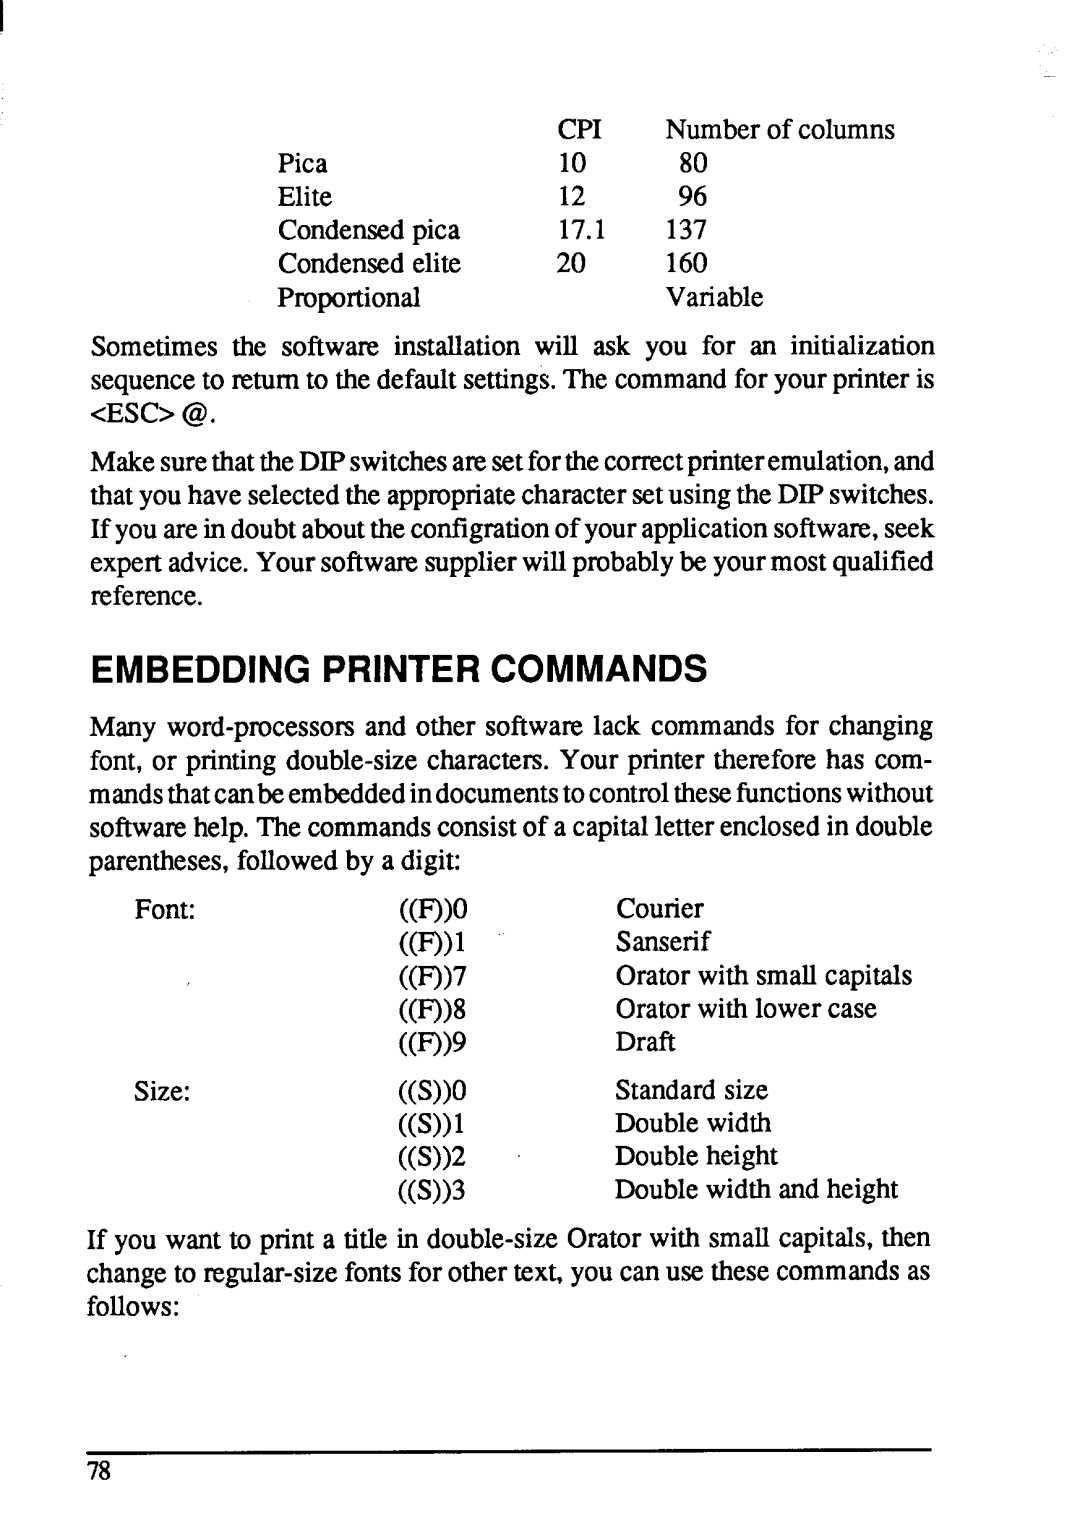 Star Micronics NX-1001 manual Embedding Printer Commands 